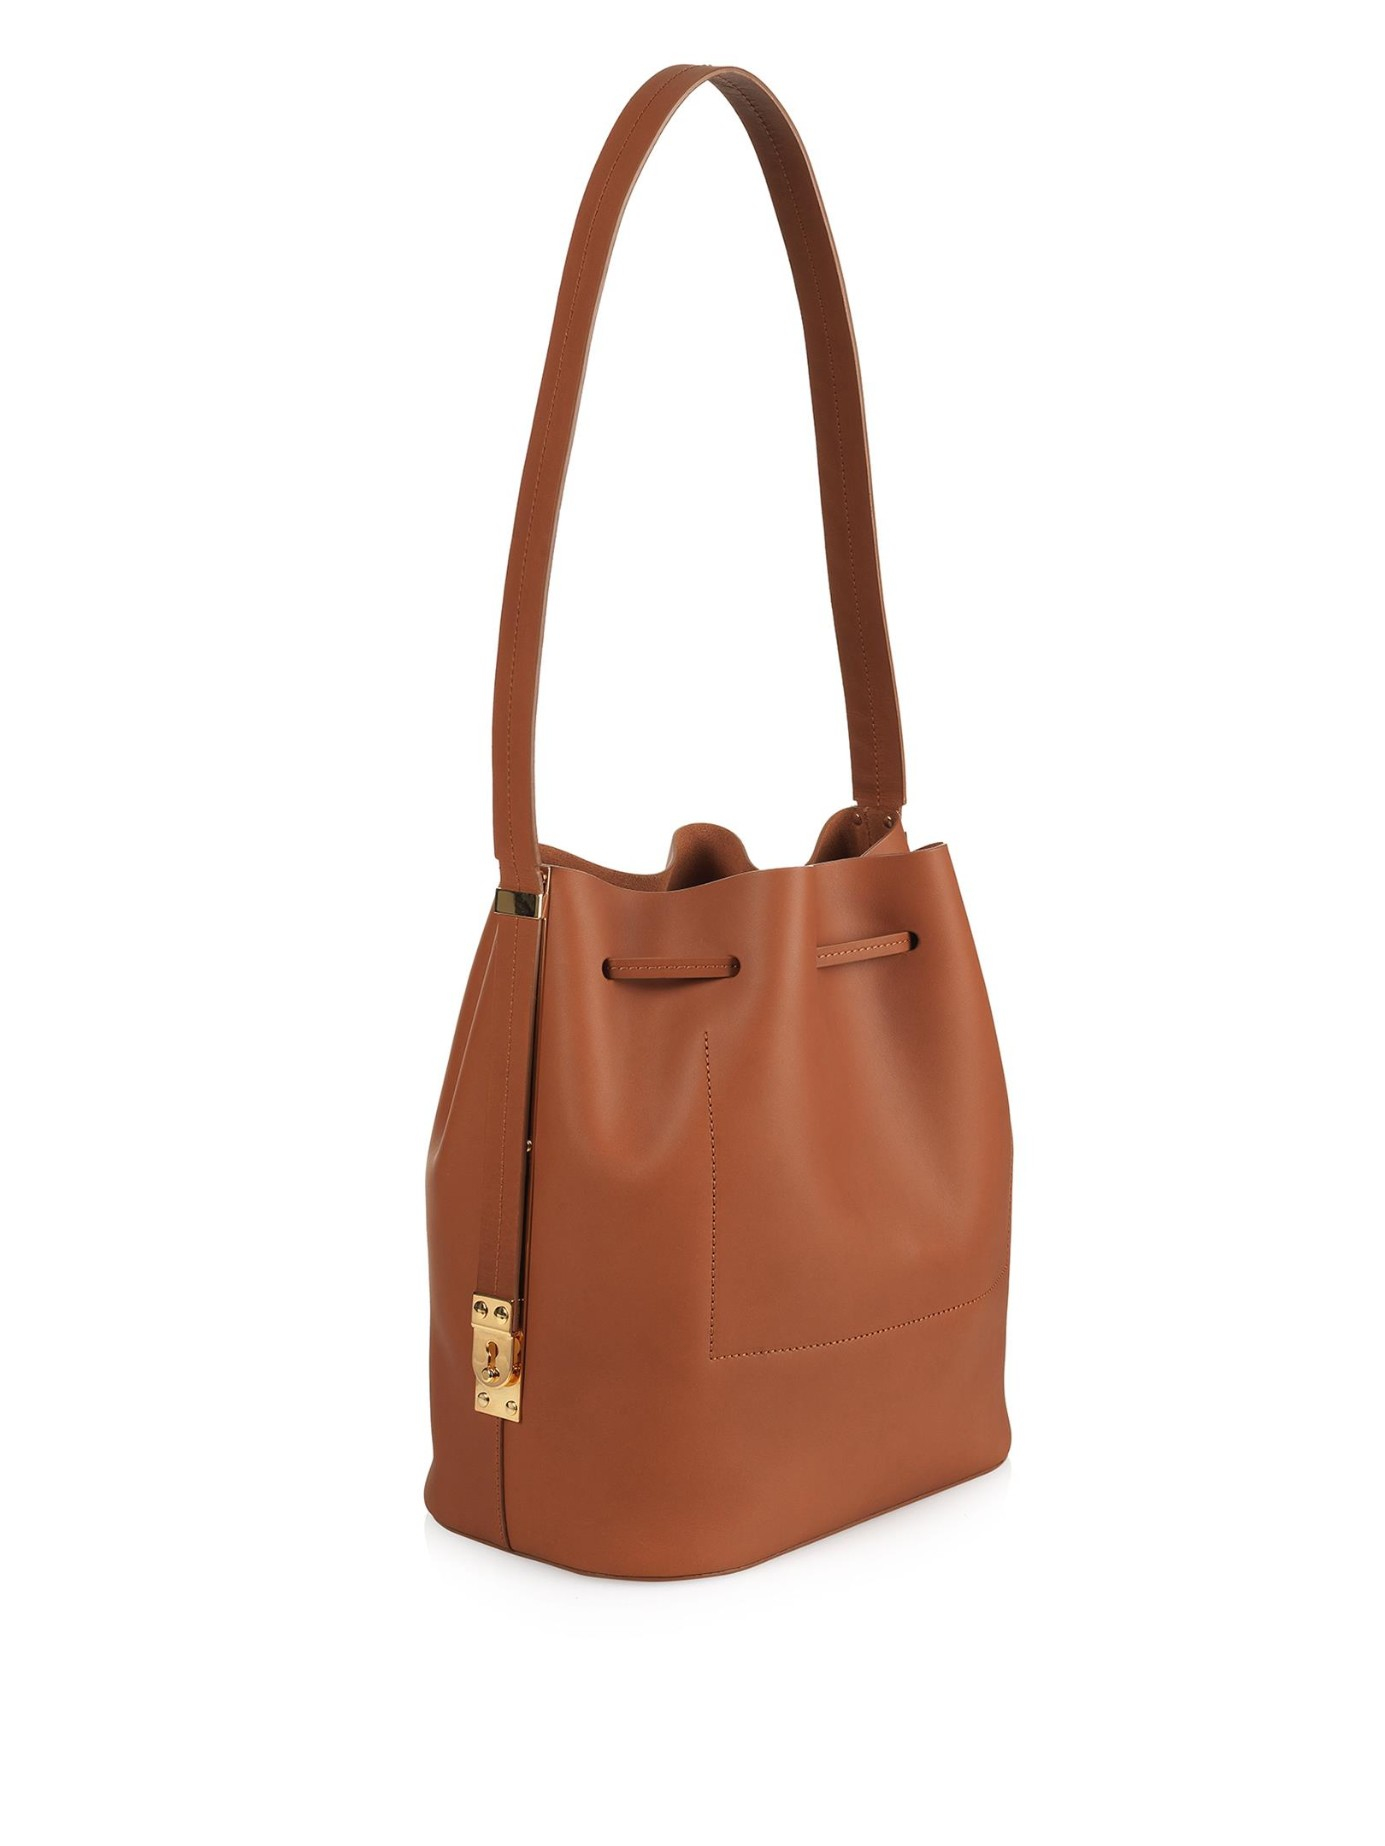 Sophie Hulme Gibson Leather Bucket Bag in Tan (Brown) - Lyst